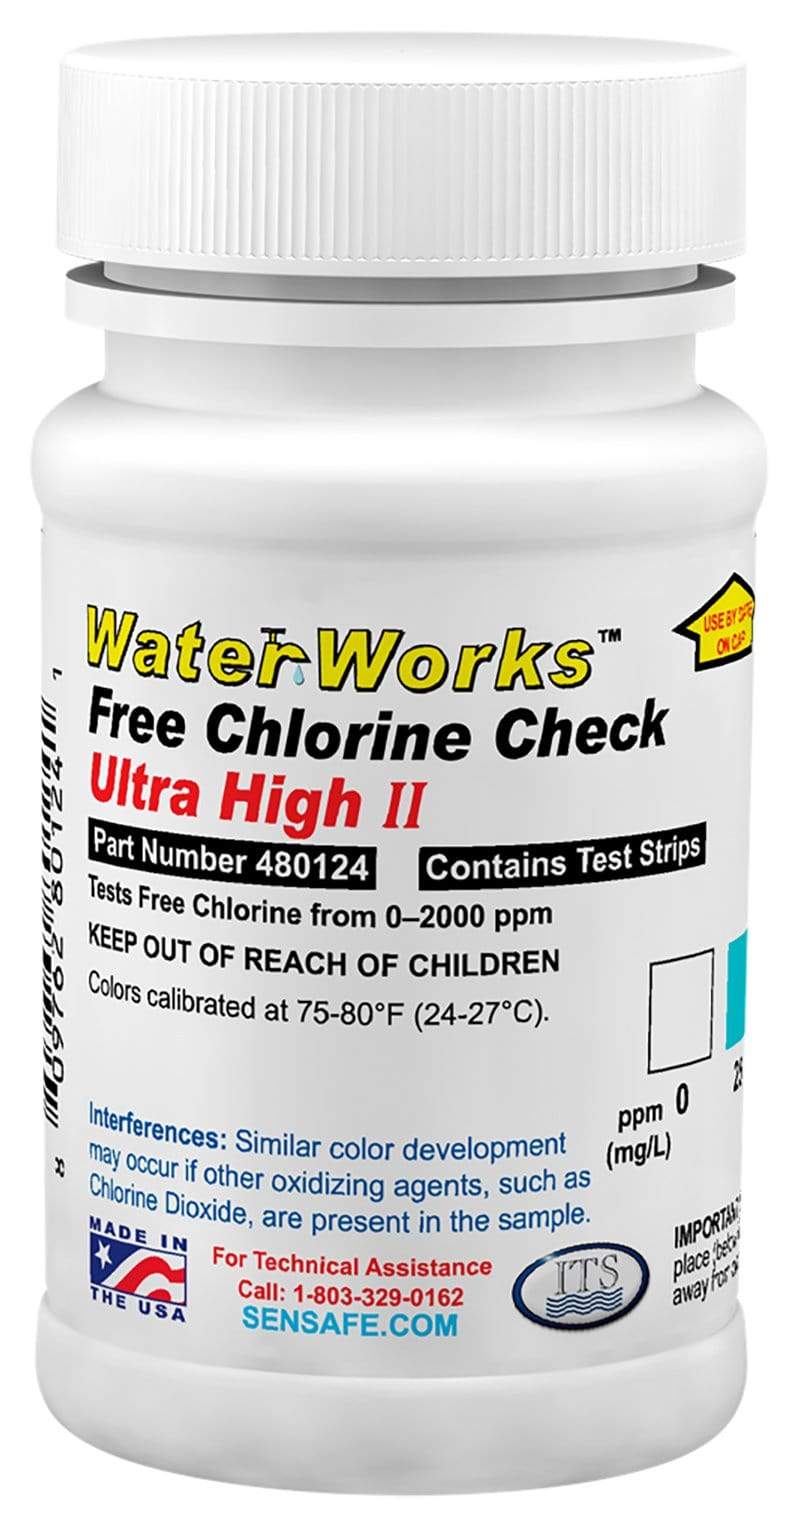 Free Chlorine Check Ultra High II, bottle of 50